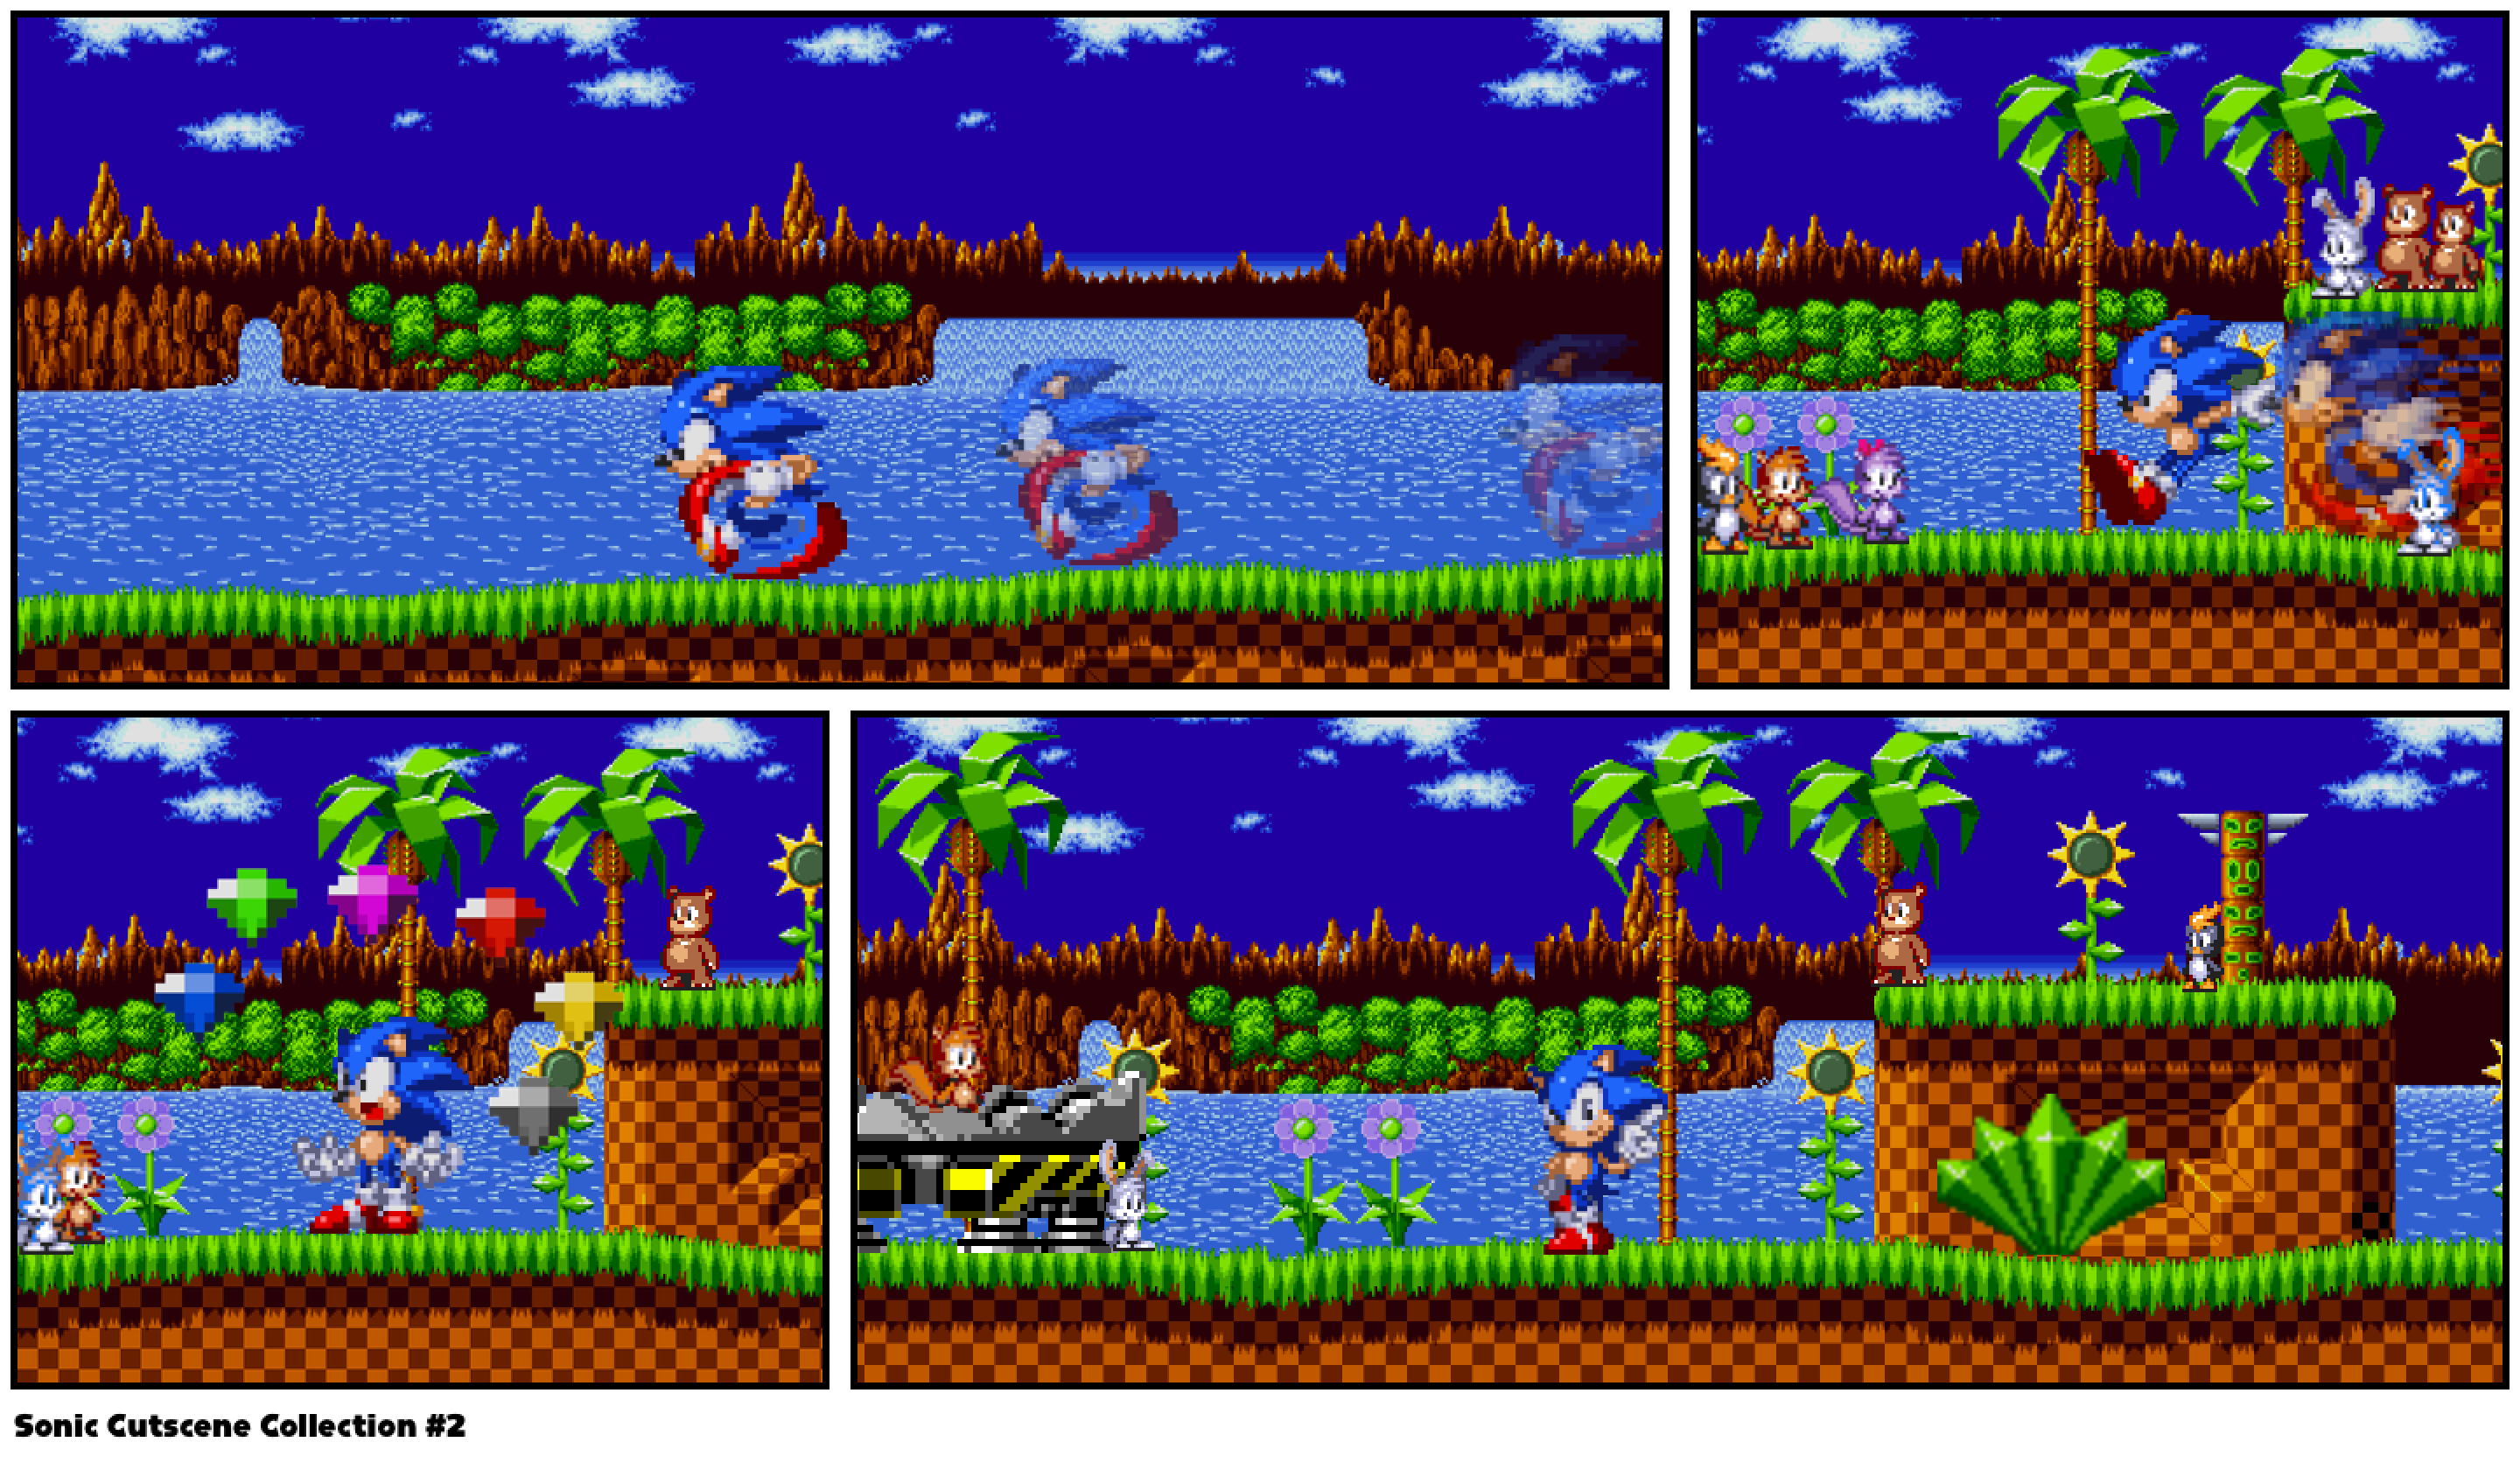 Sonic Cutscene Collection #2